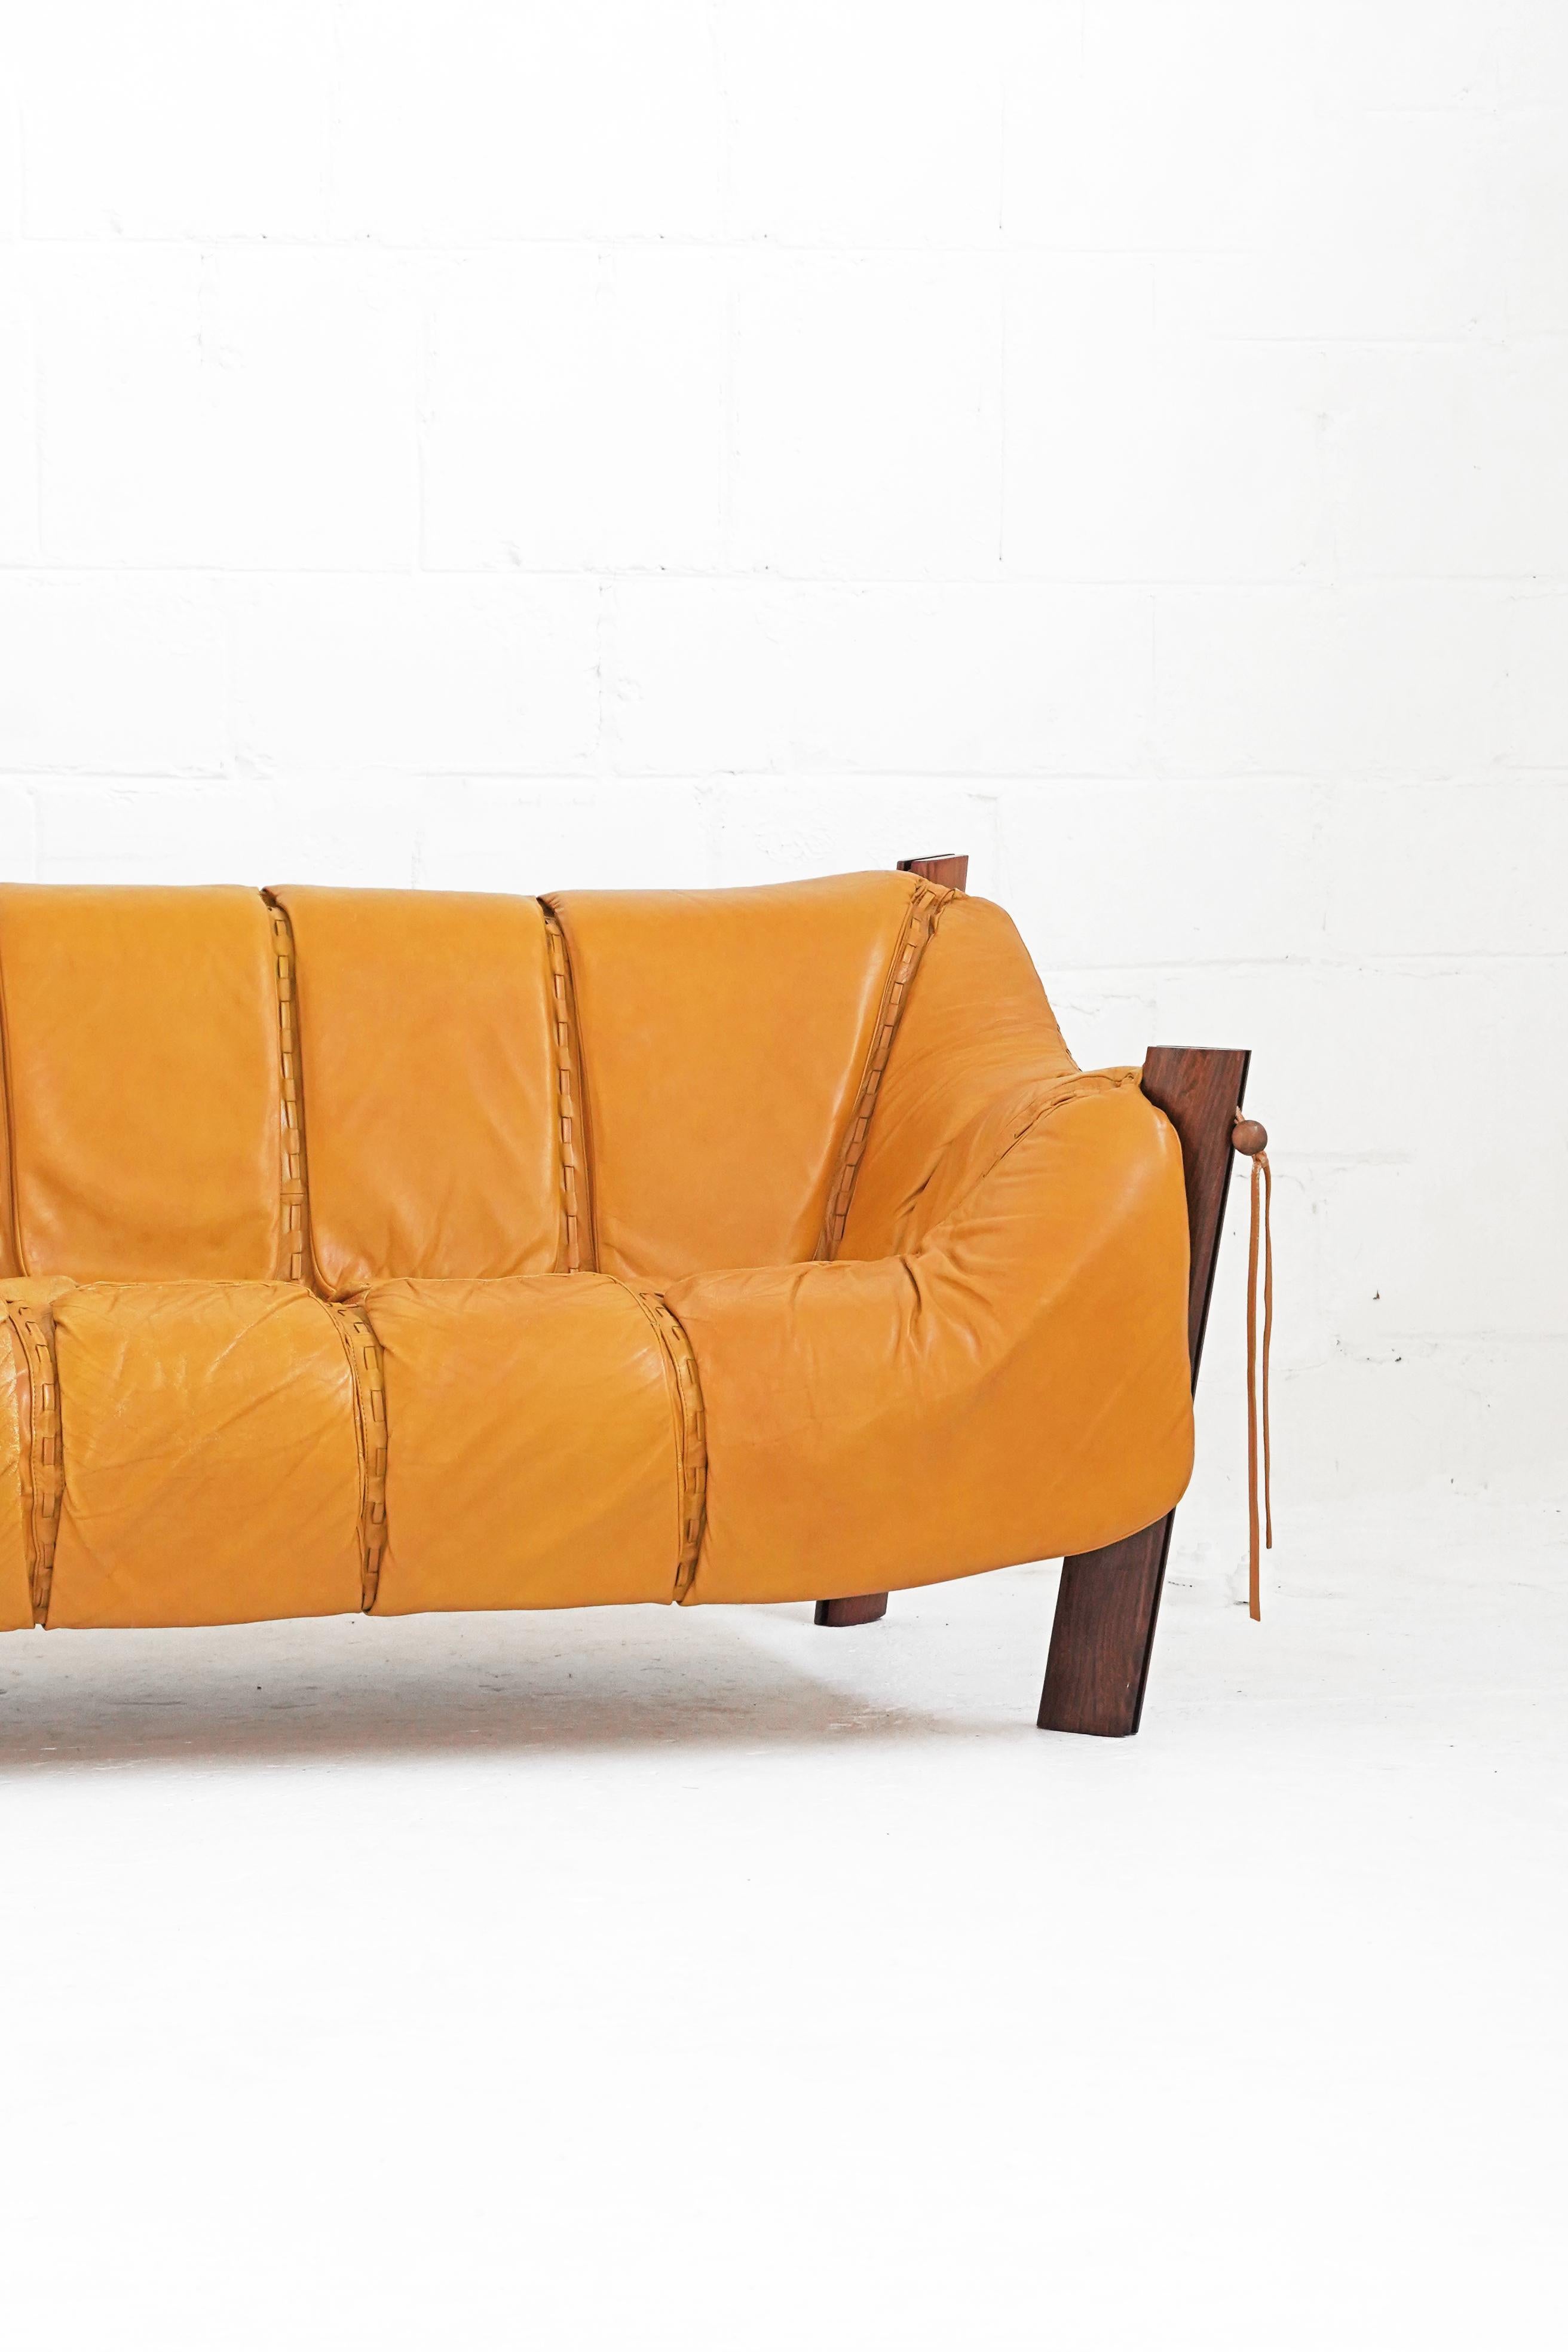 MP-211 Sofa in Leather by Brazilian Designer Percival Lafer for Móveis Lafer 6